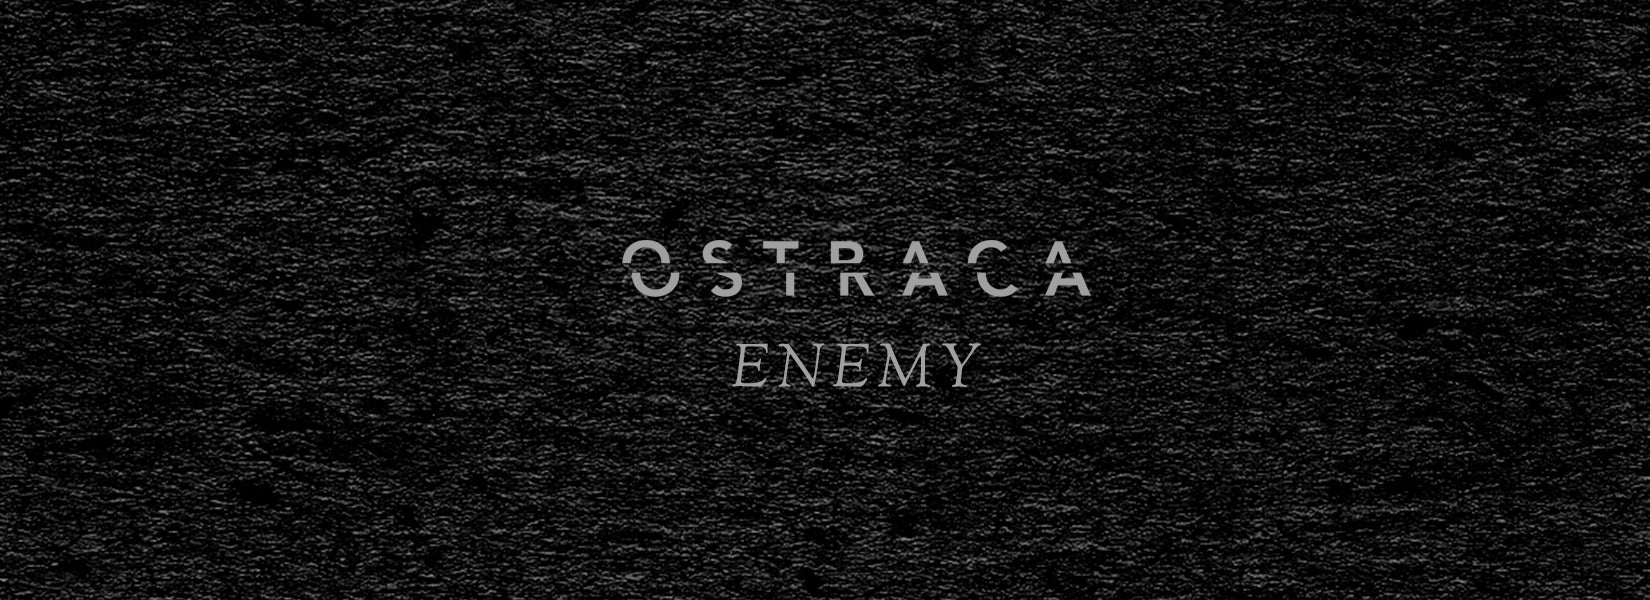 Ostraca share new album "enemy"; Announces summer tour